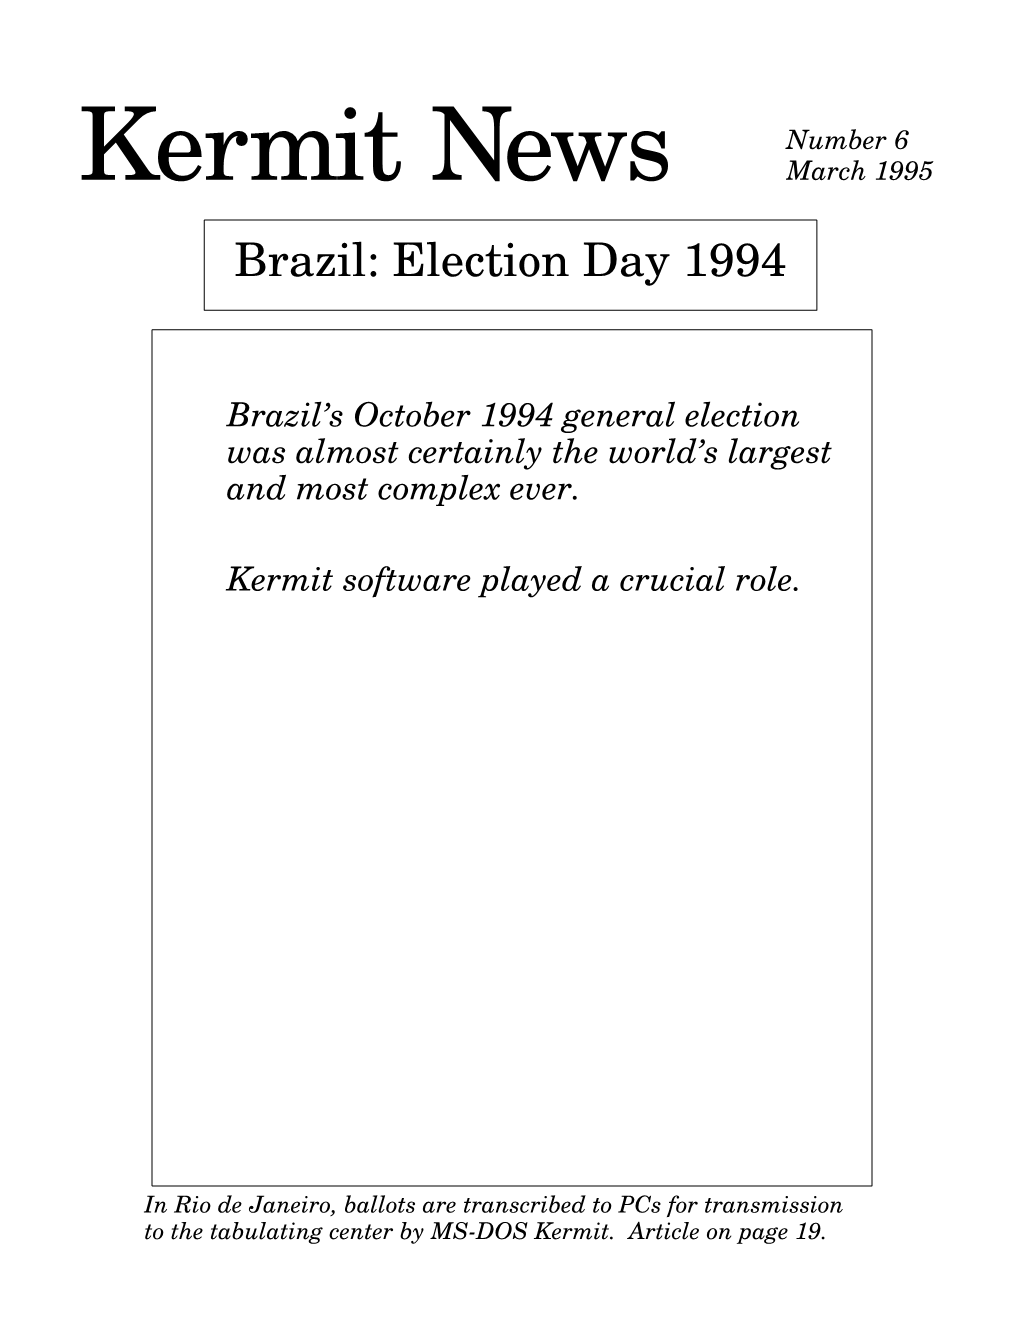 Kermit News March 1995 Brazil: Election Day 1994